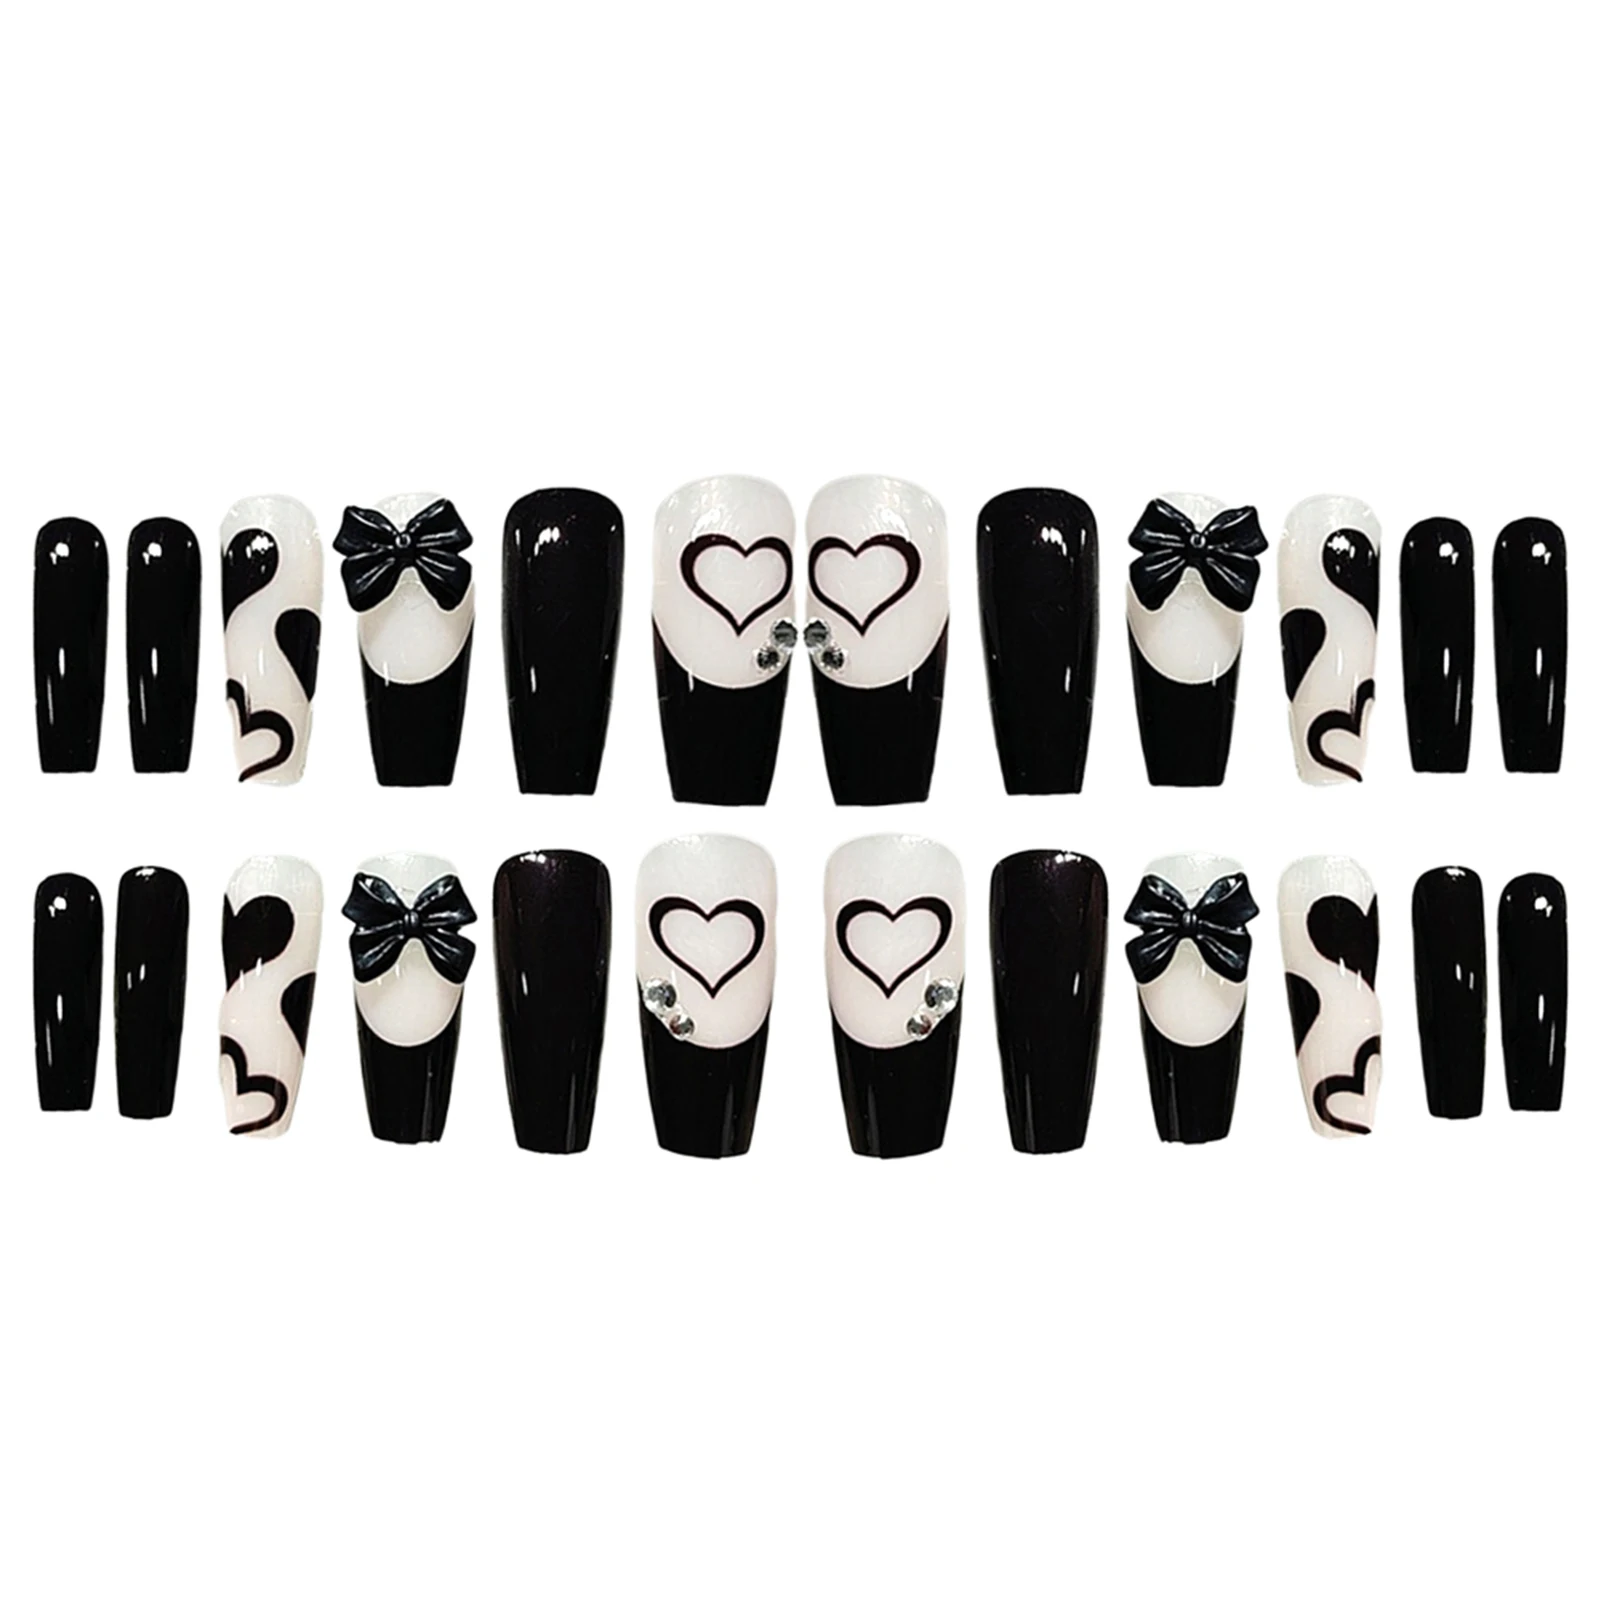 24pcs Long Press On Nails Cute Black Bow Design Fake Nails Full Coverage Nail Manicure Salon DIY Art Dark Style Nails Tips Uñas images - 6